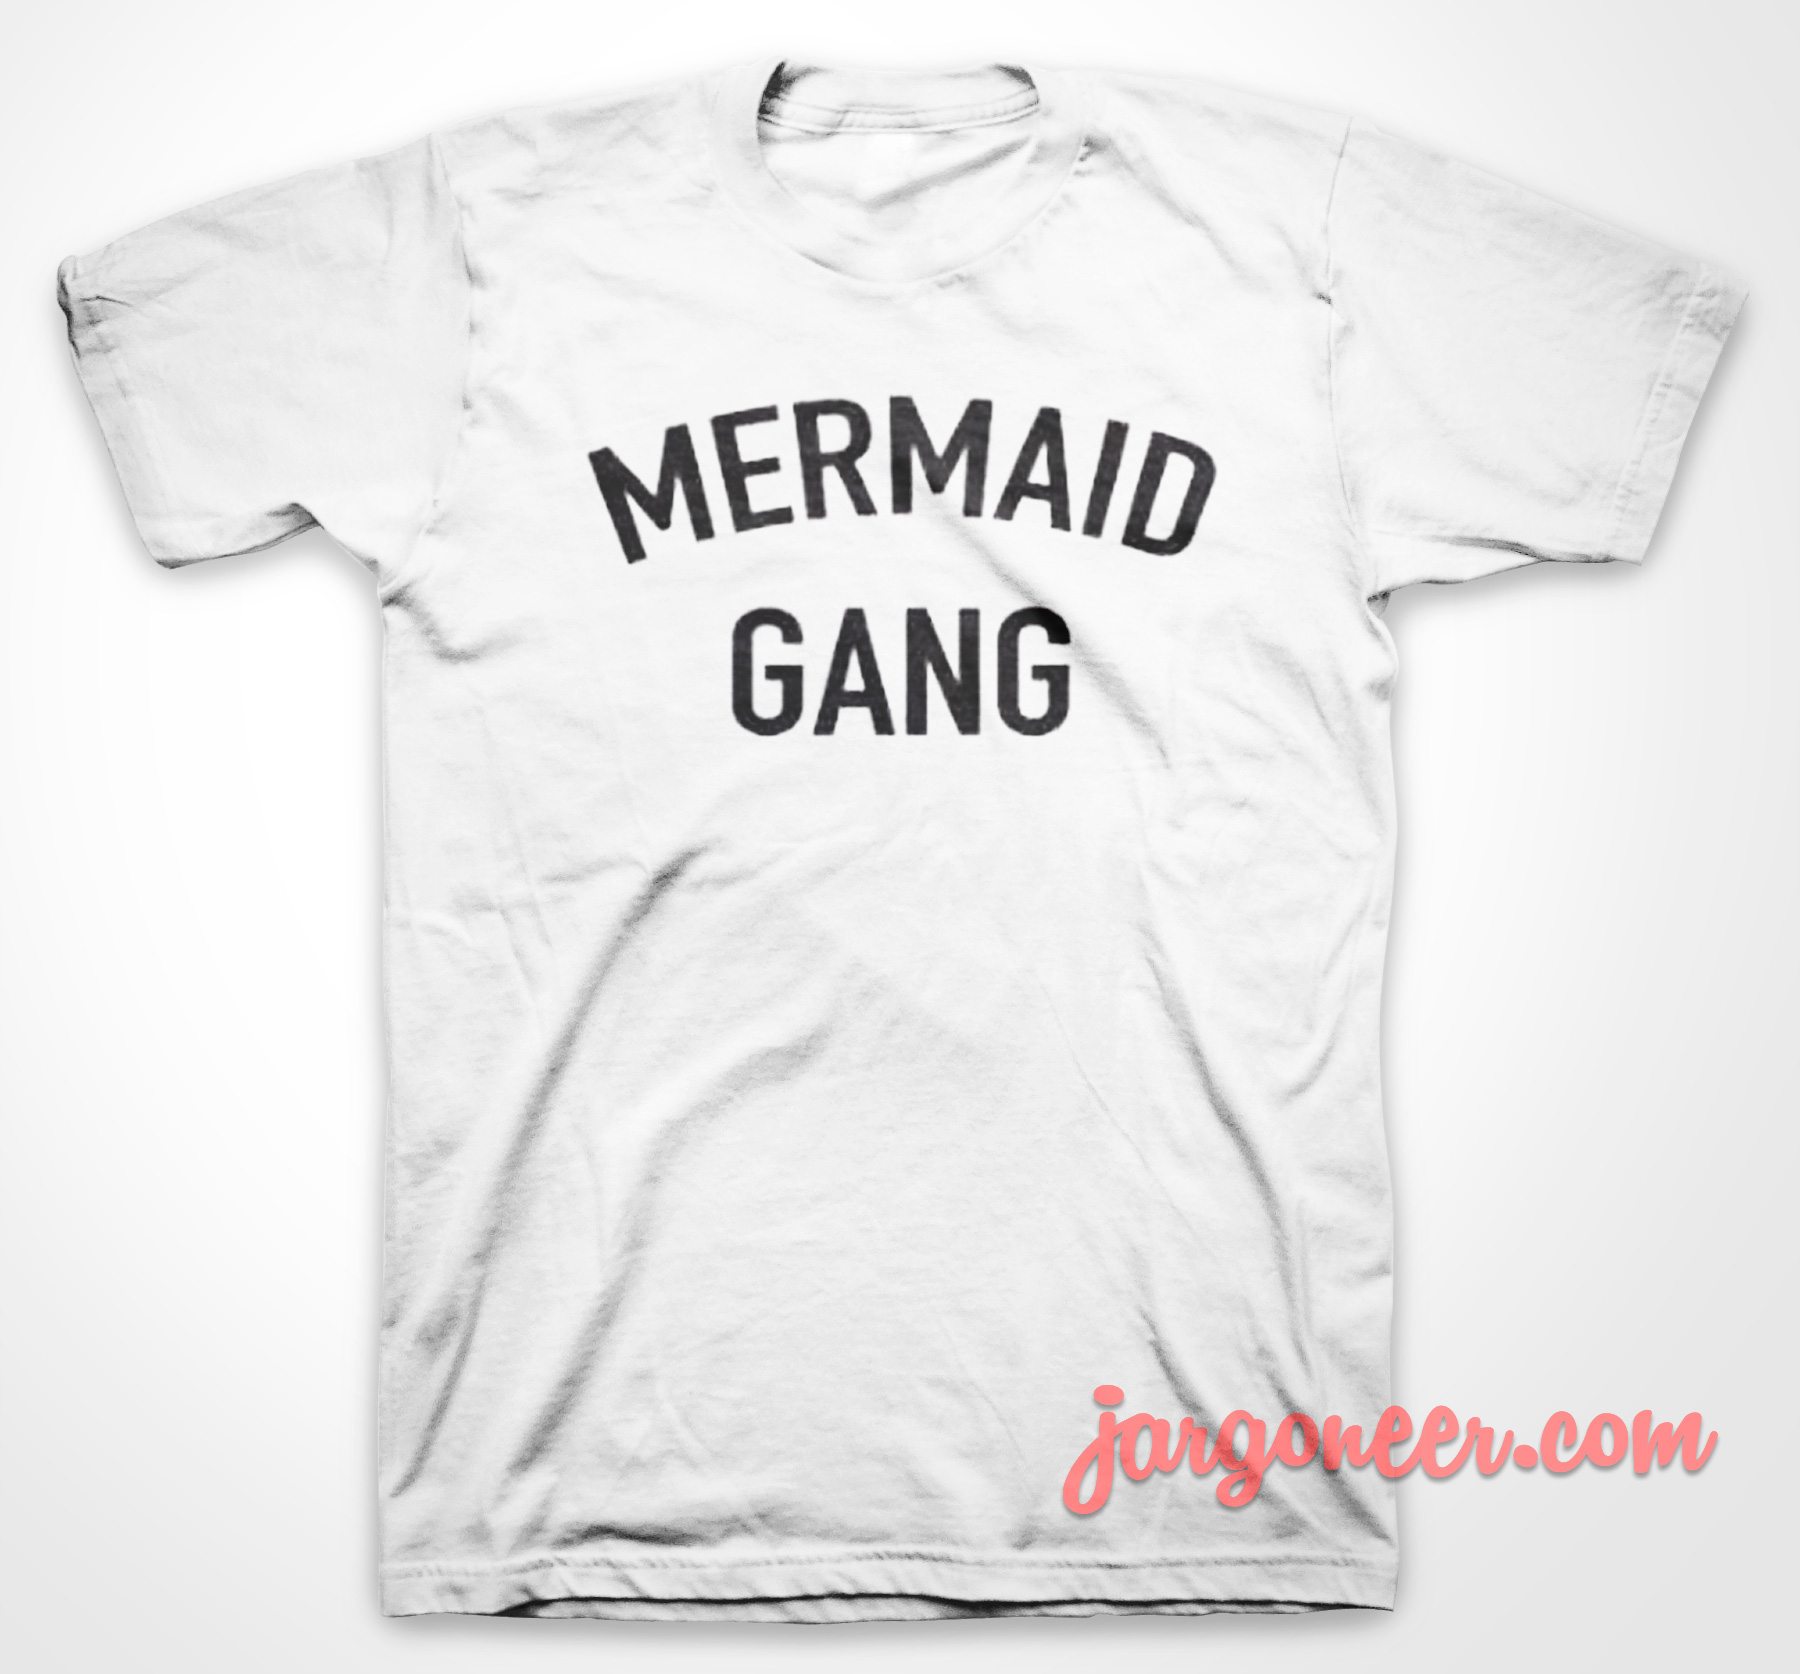 Mermaid Gang - Shop Unique Graphic Cool Shirt Designs